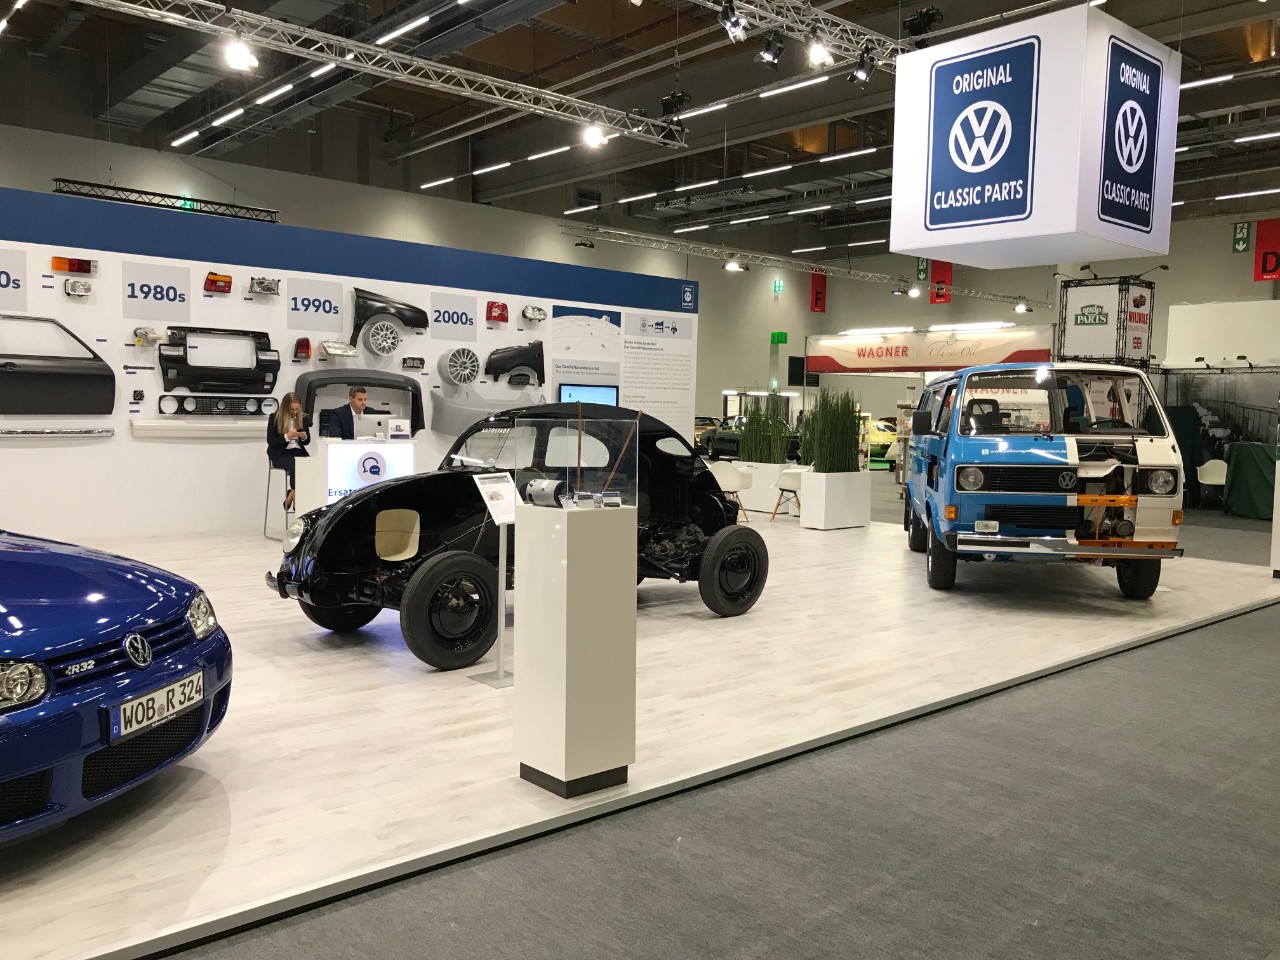 Volkswagen Classic Parts - Automechanika 2018 | Schnittmodelle